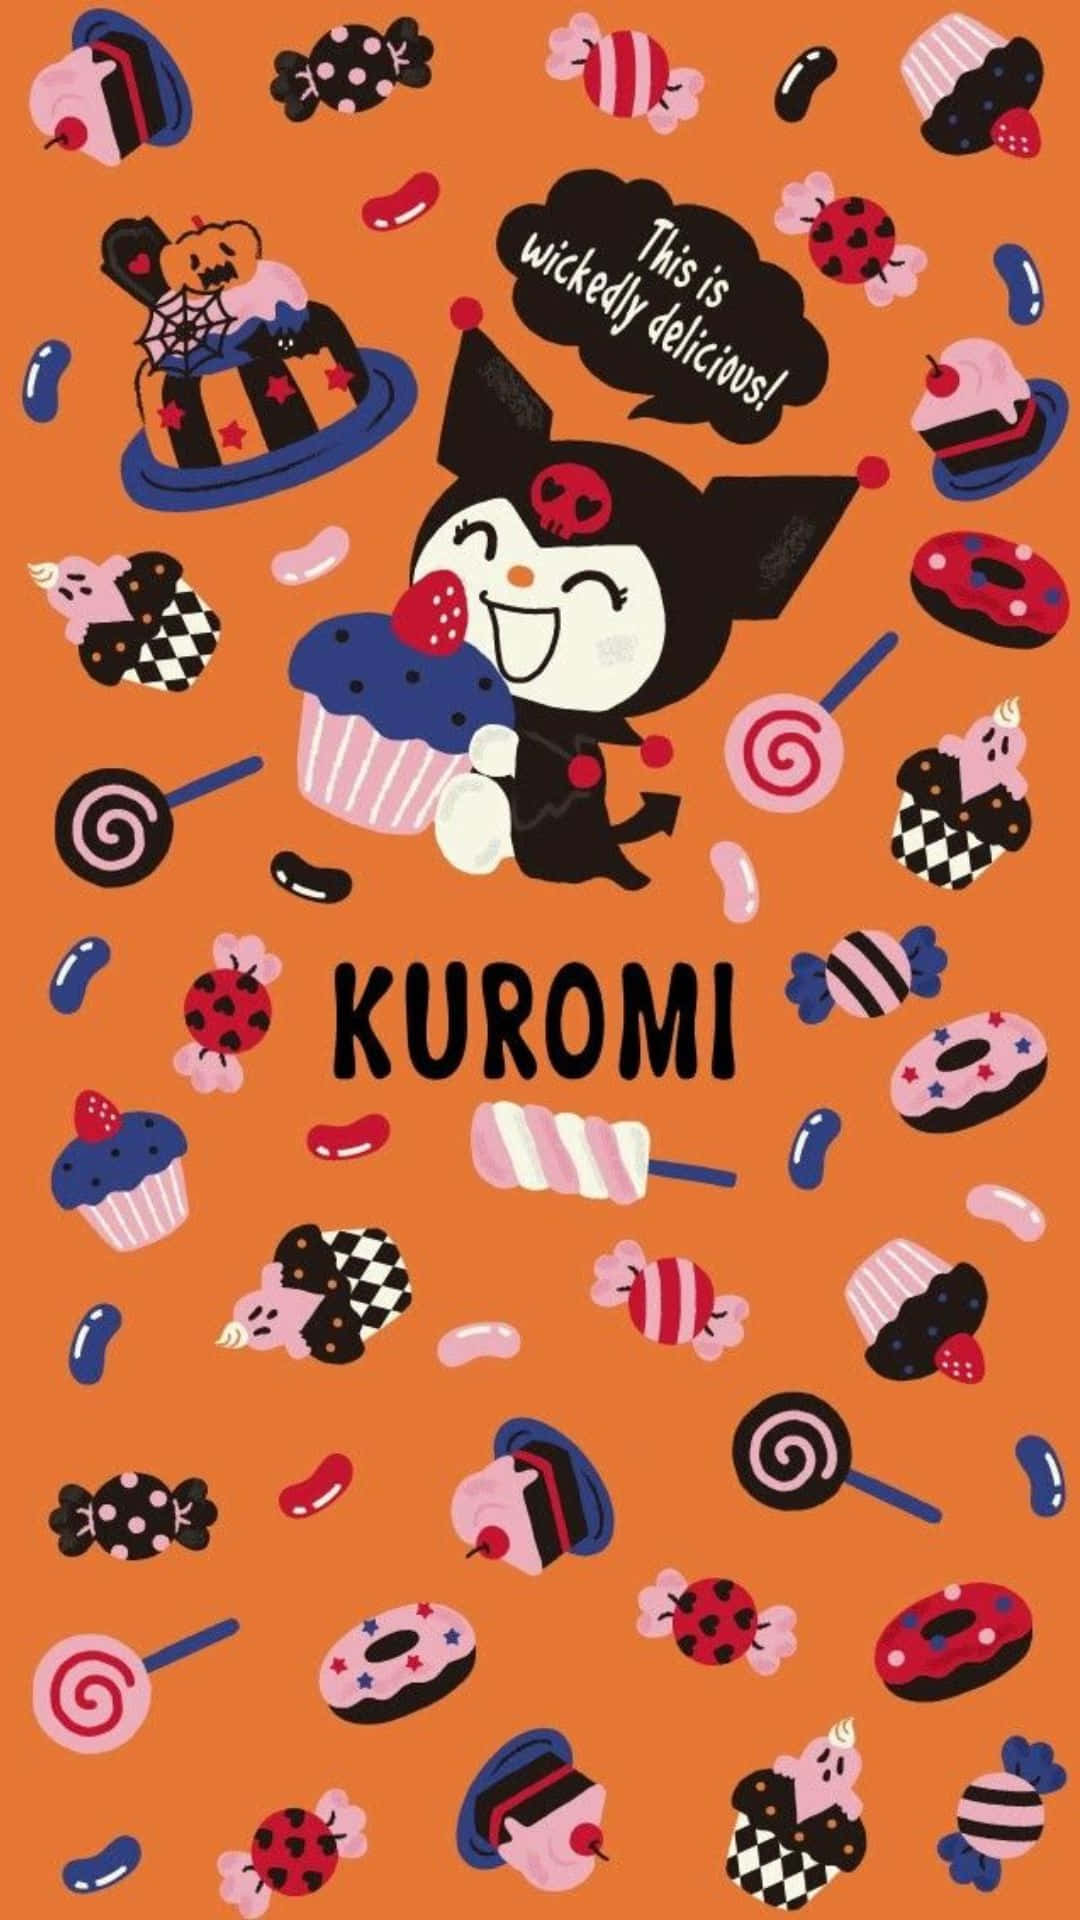 Caption: Spooky Kuromi Halloween Wallpaper Wallpaper